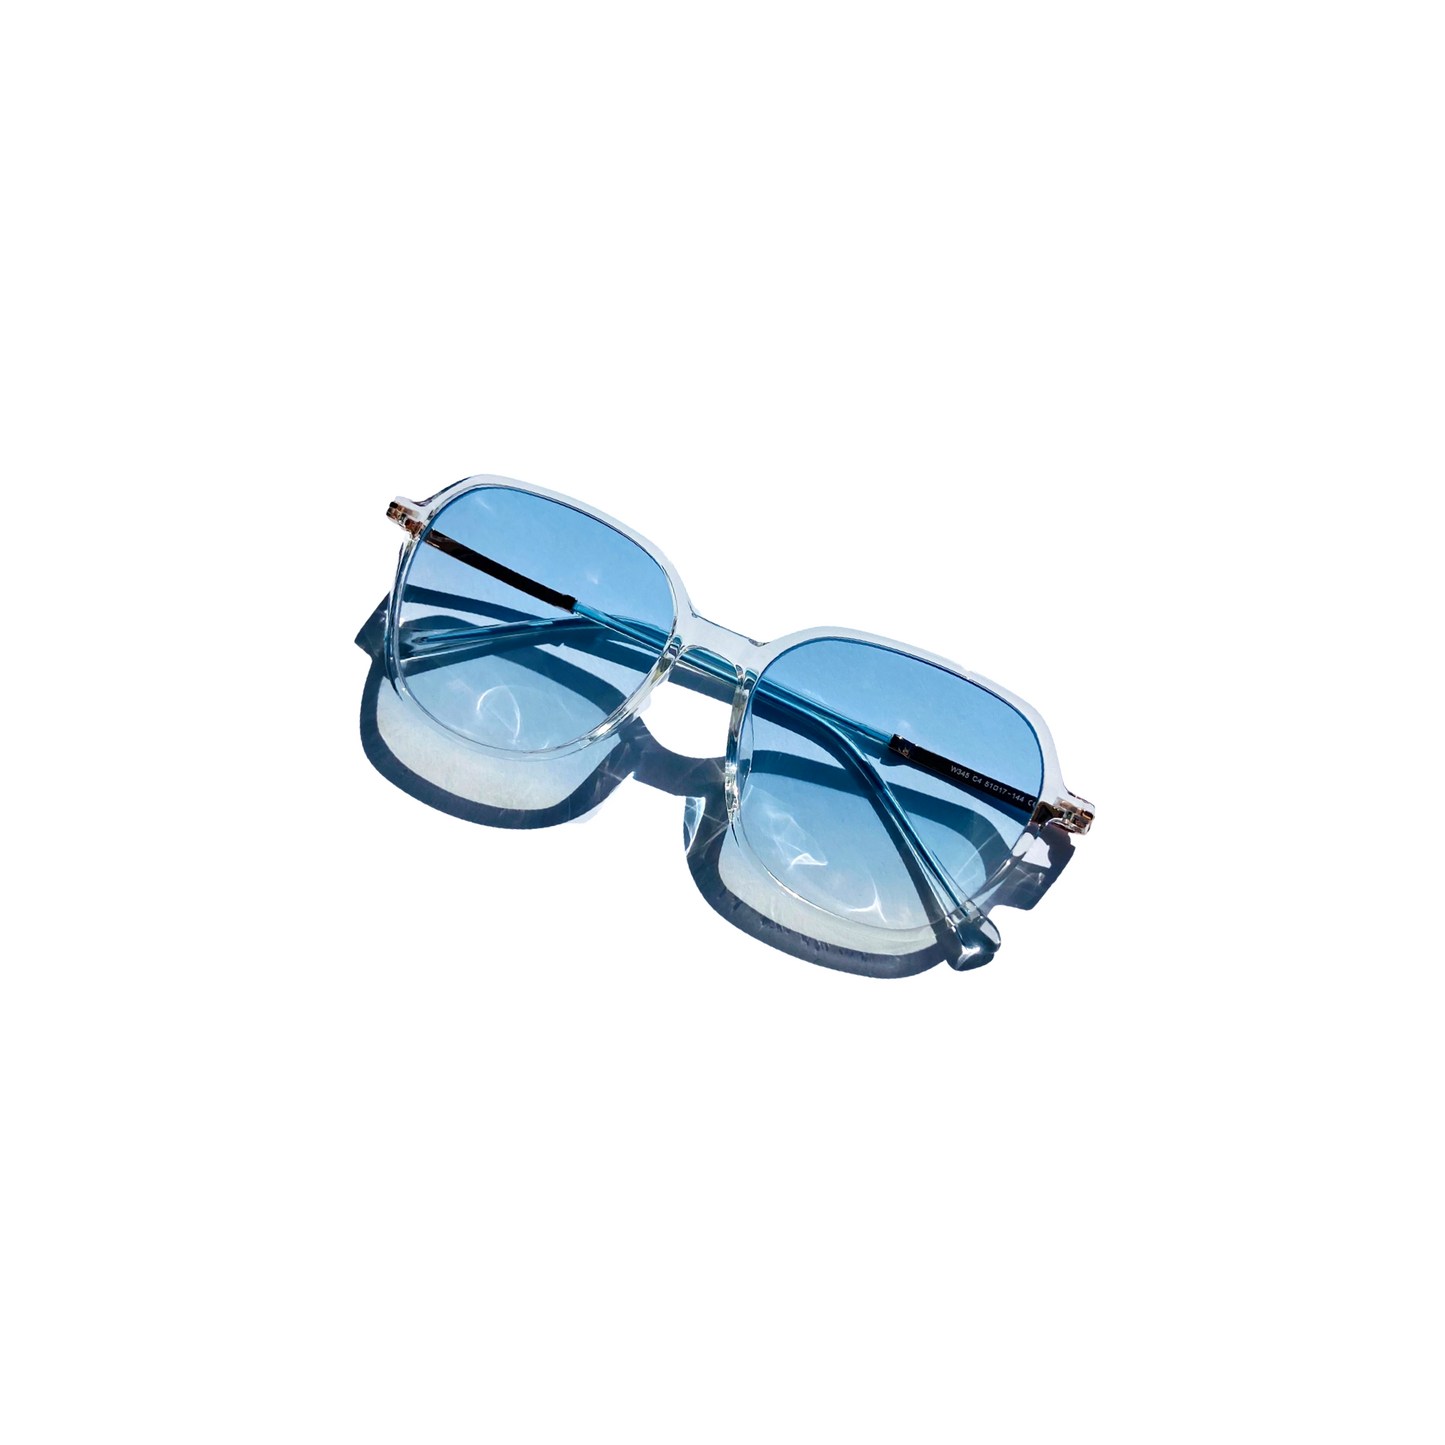 Translucent Blue transparent: Blue Sunglasses